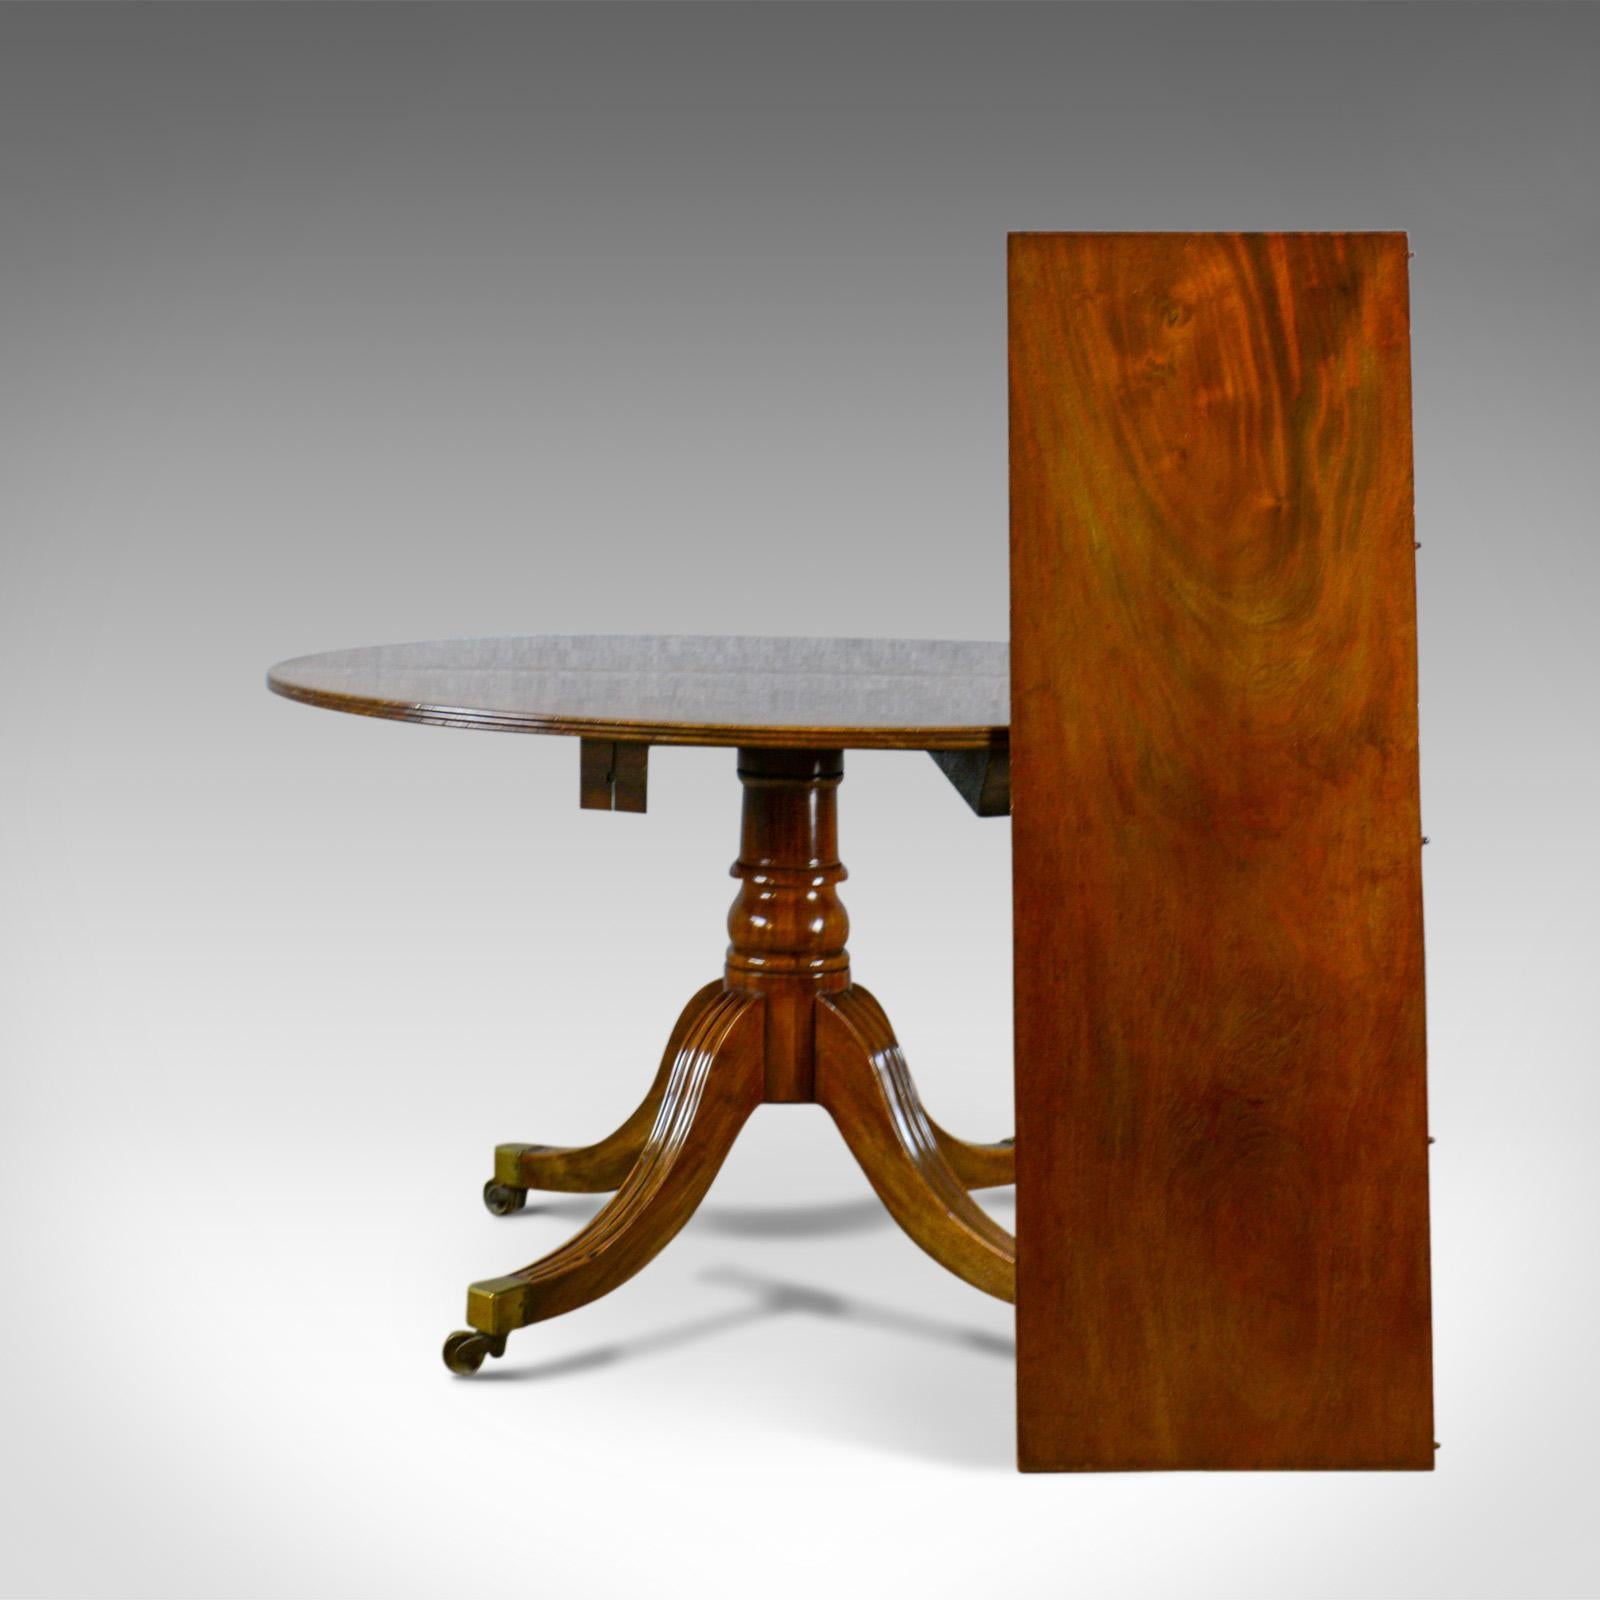 Antique Dining Table, English, Mahogany, Seats 4-6, Extending, Regency 1